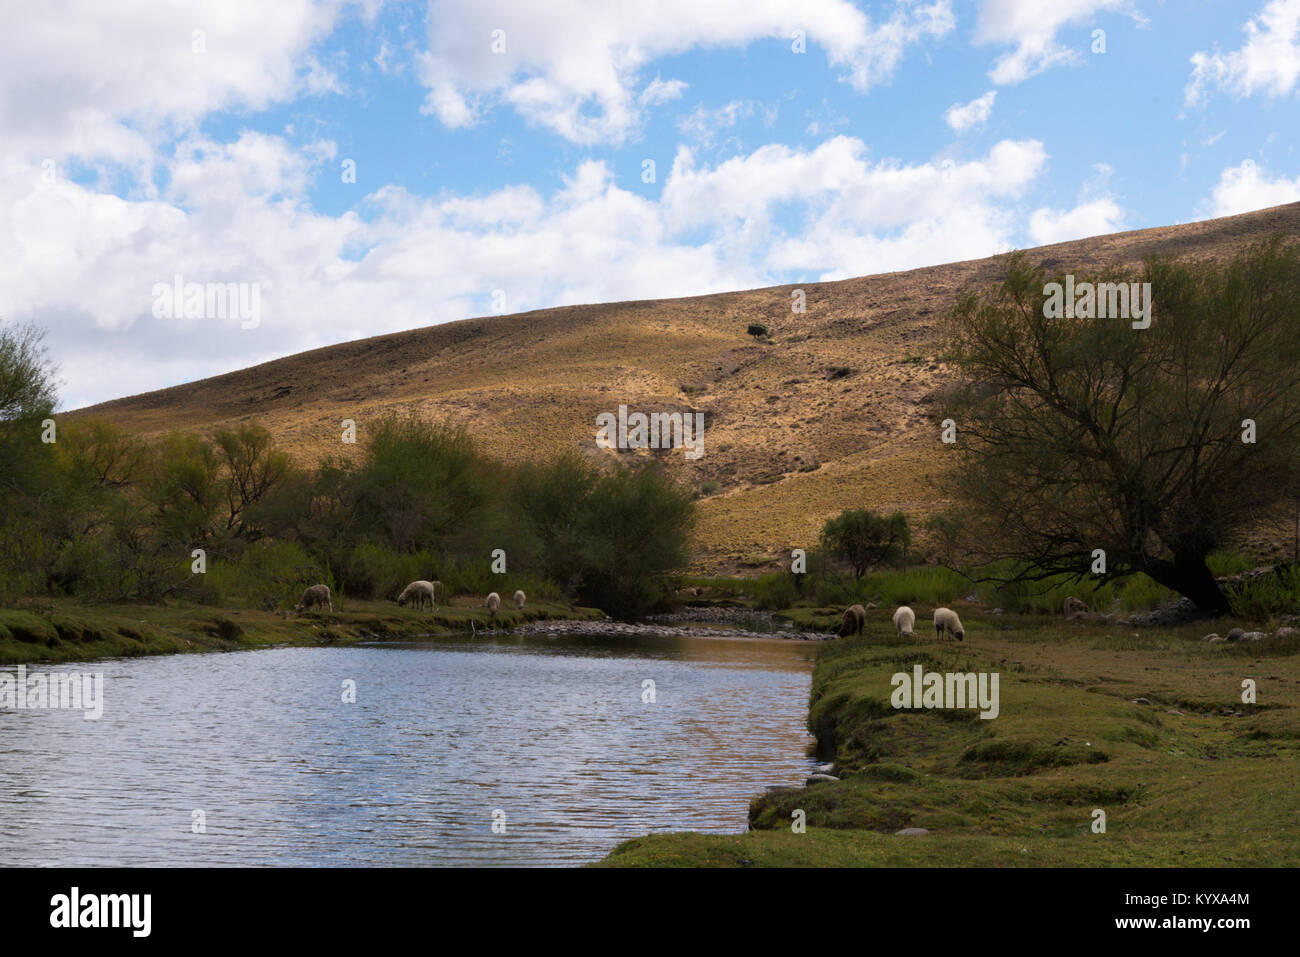 The Neuquén Province landscape, Argentina Stock Photo